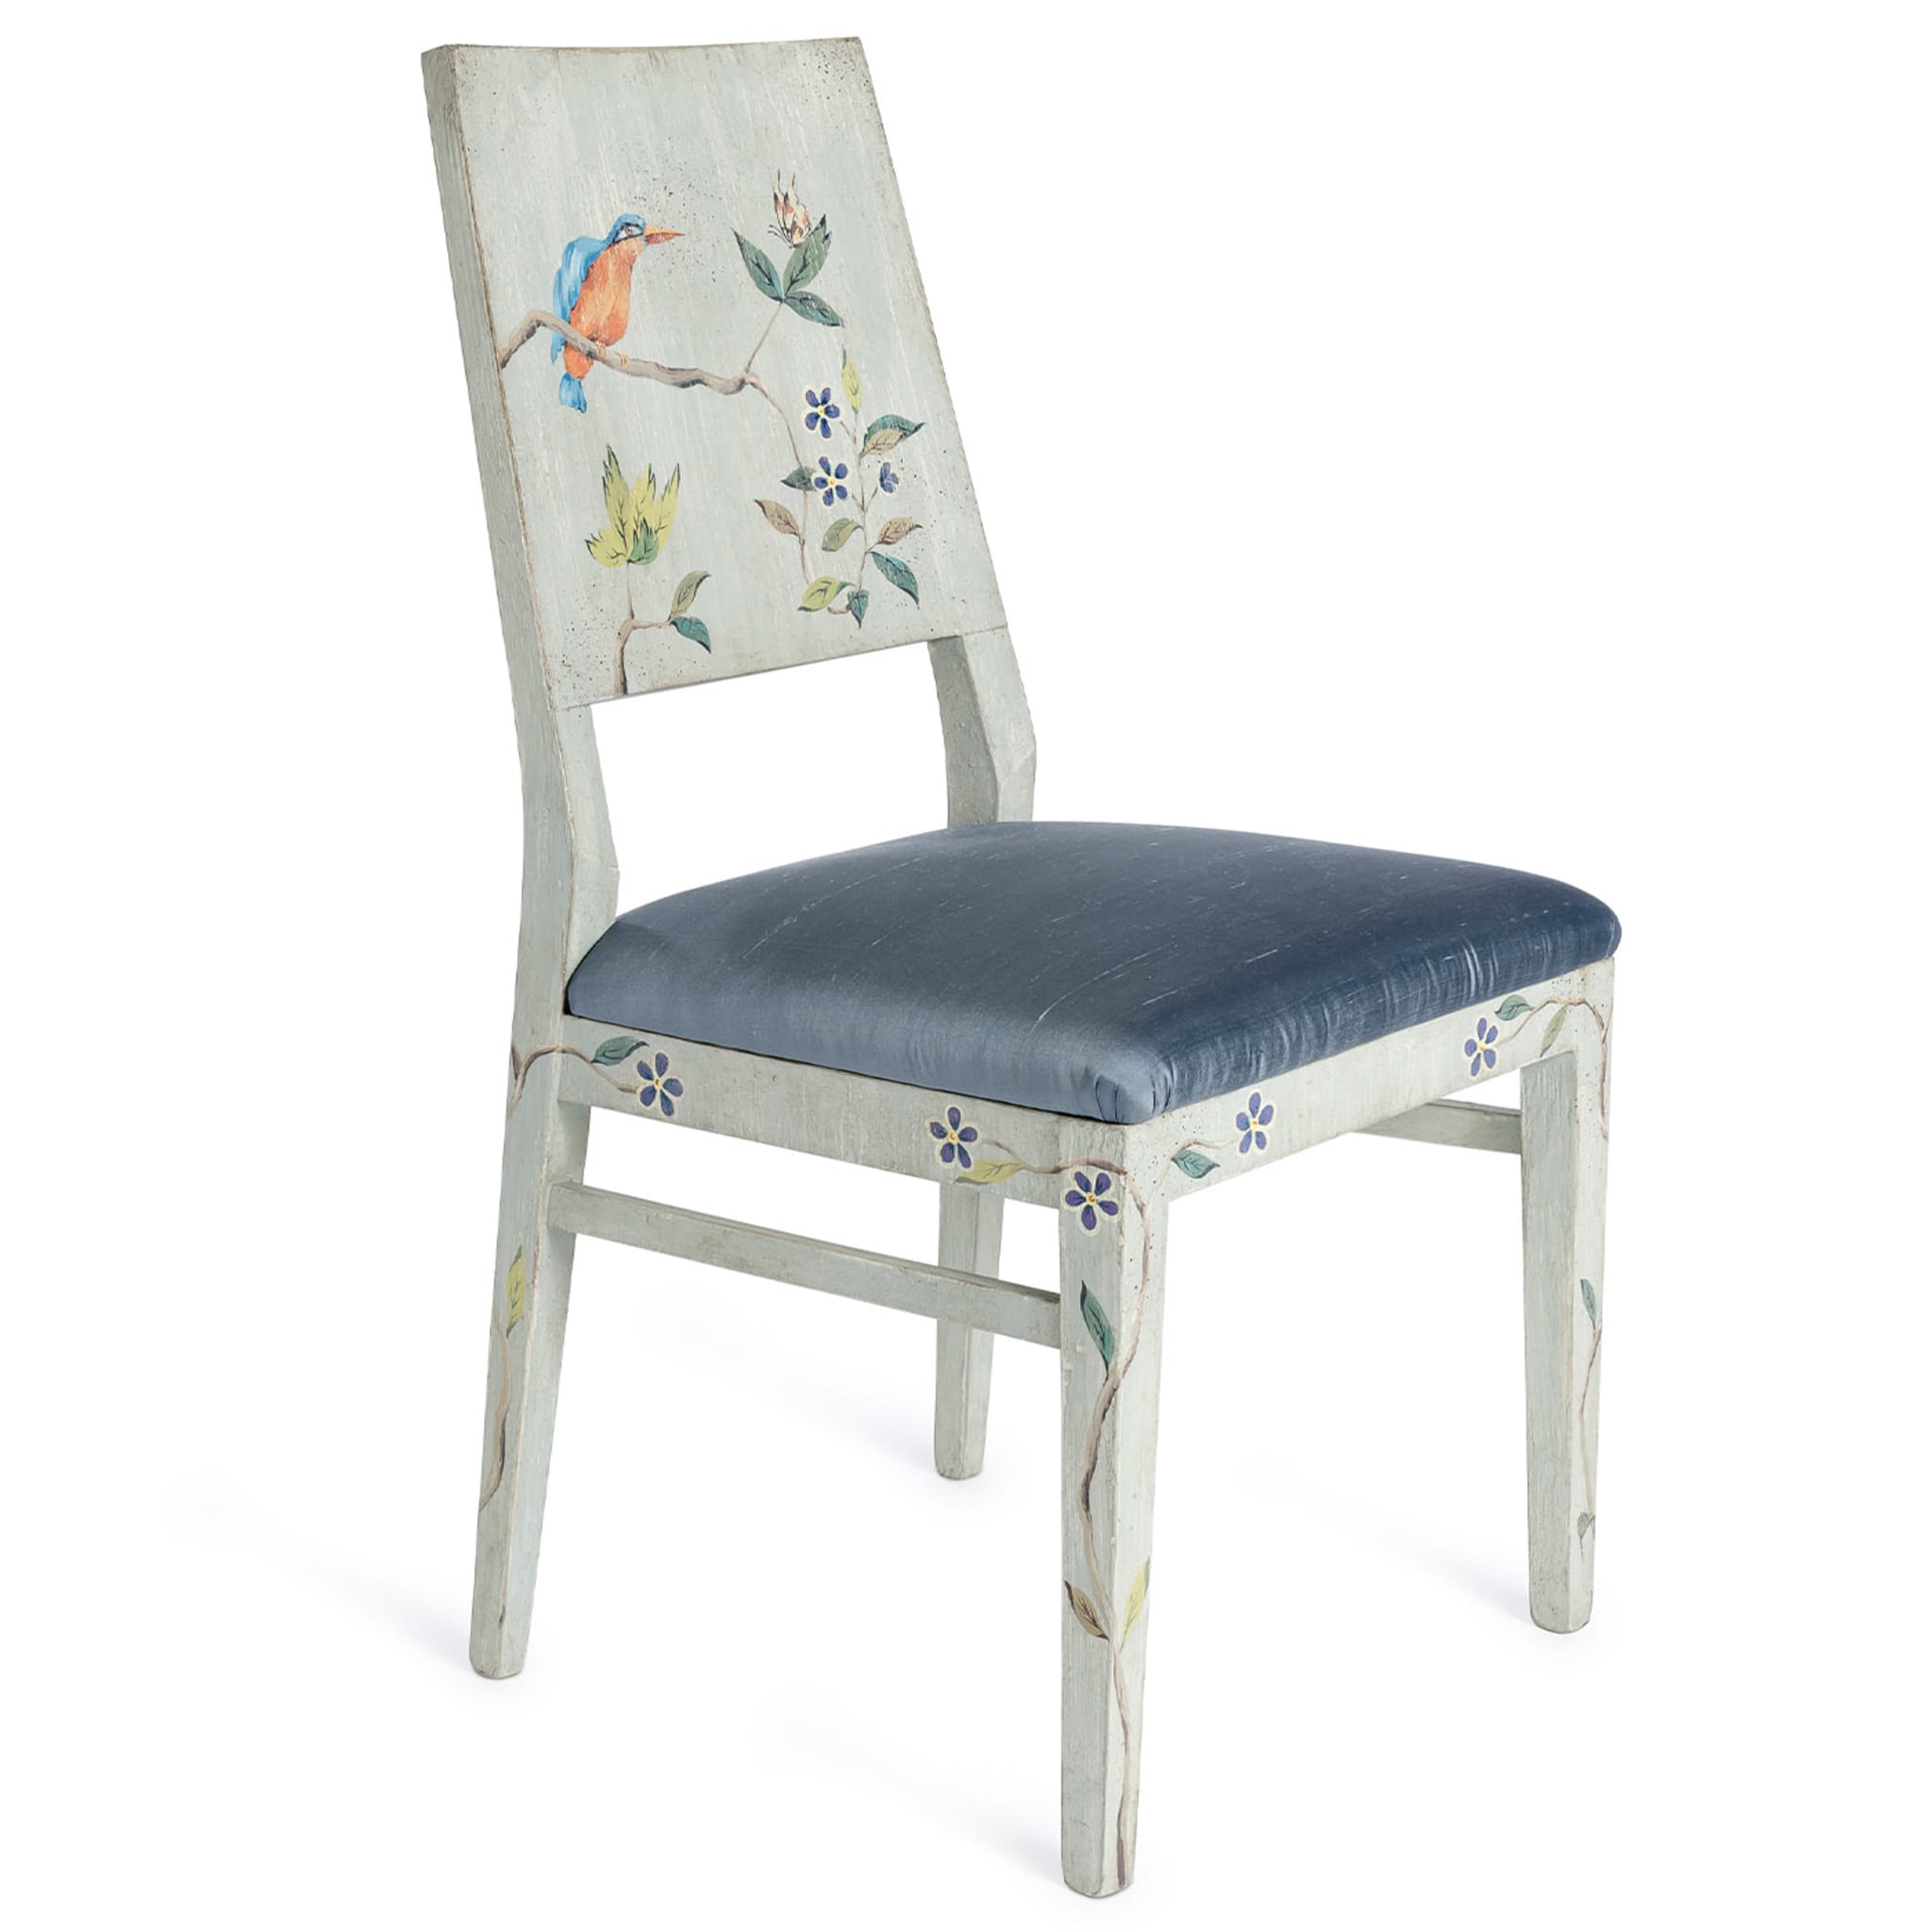 Azure Indigo Chair with Foliage - Alternative view 4